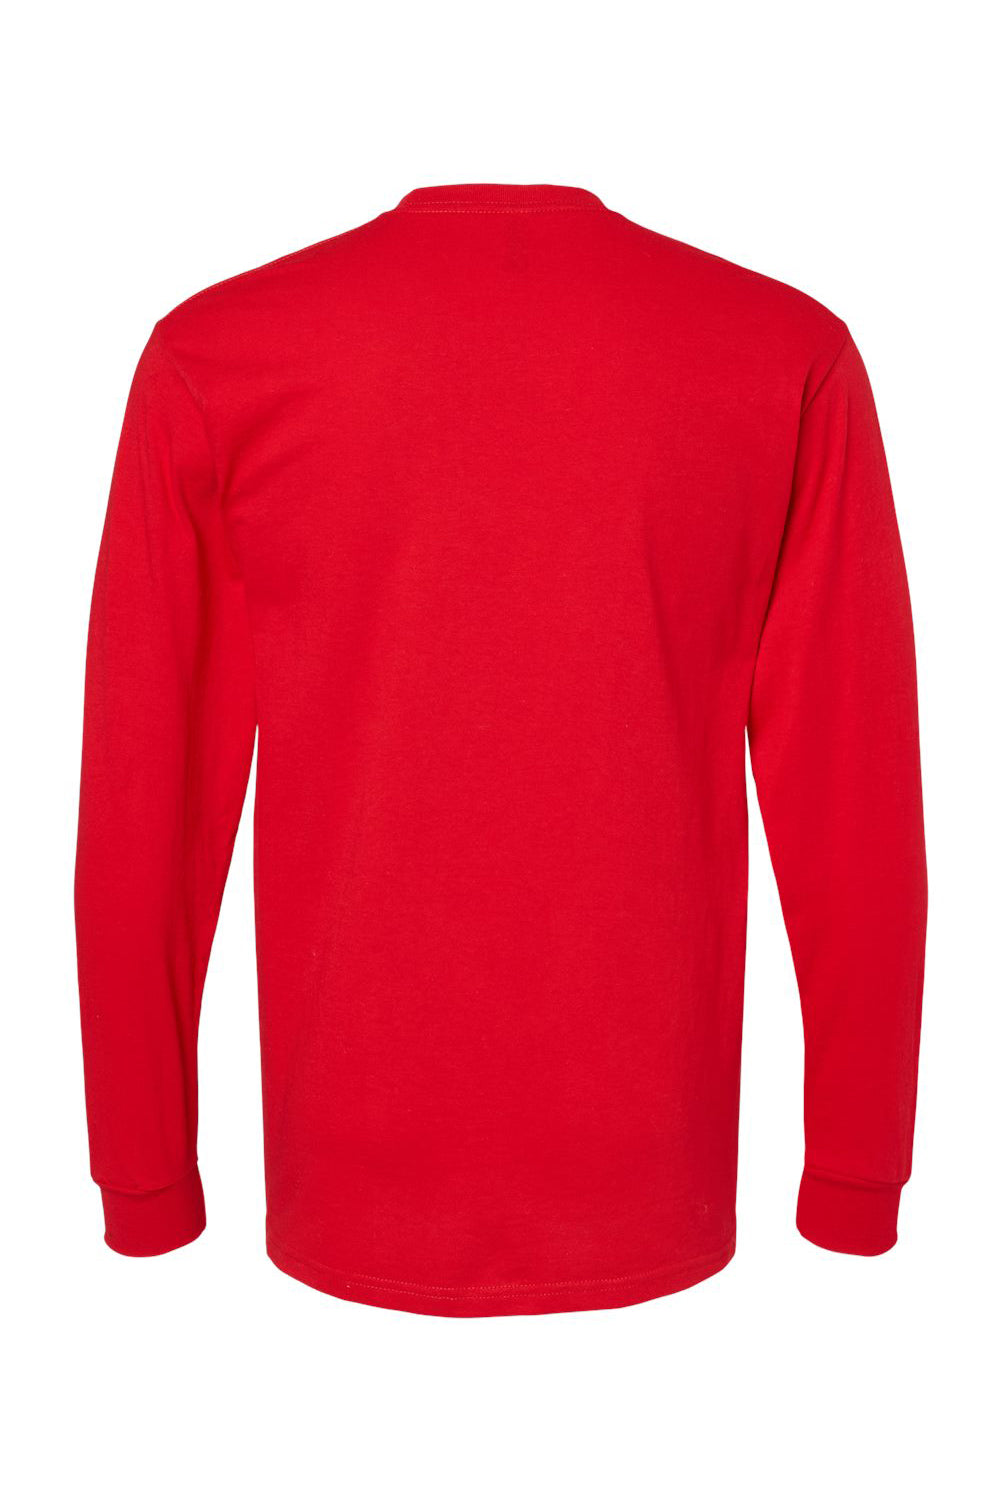 M&O 4820 Mens Gold Soft Touch Long Sleeve Crewneck T-Shirt Deep Red Flat Back